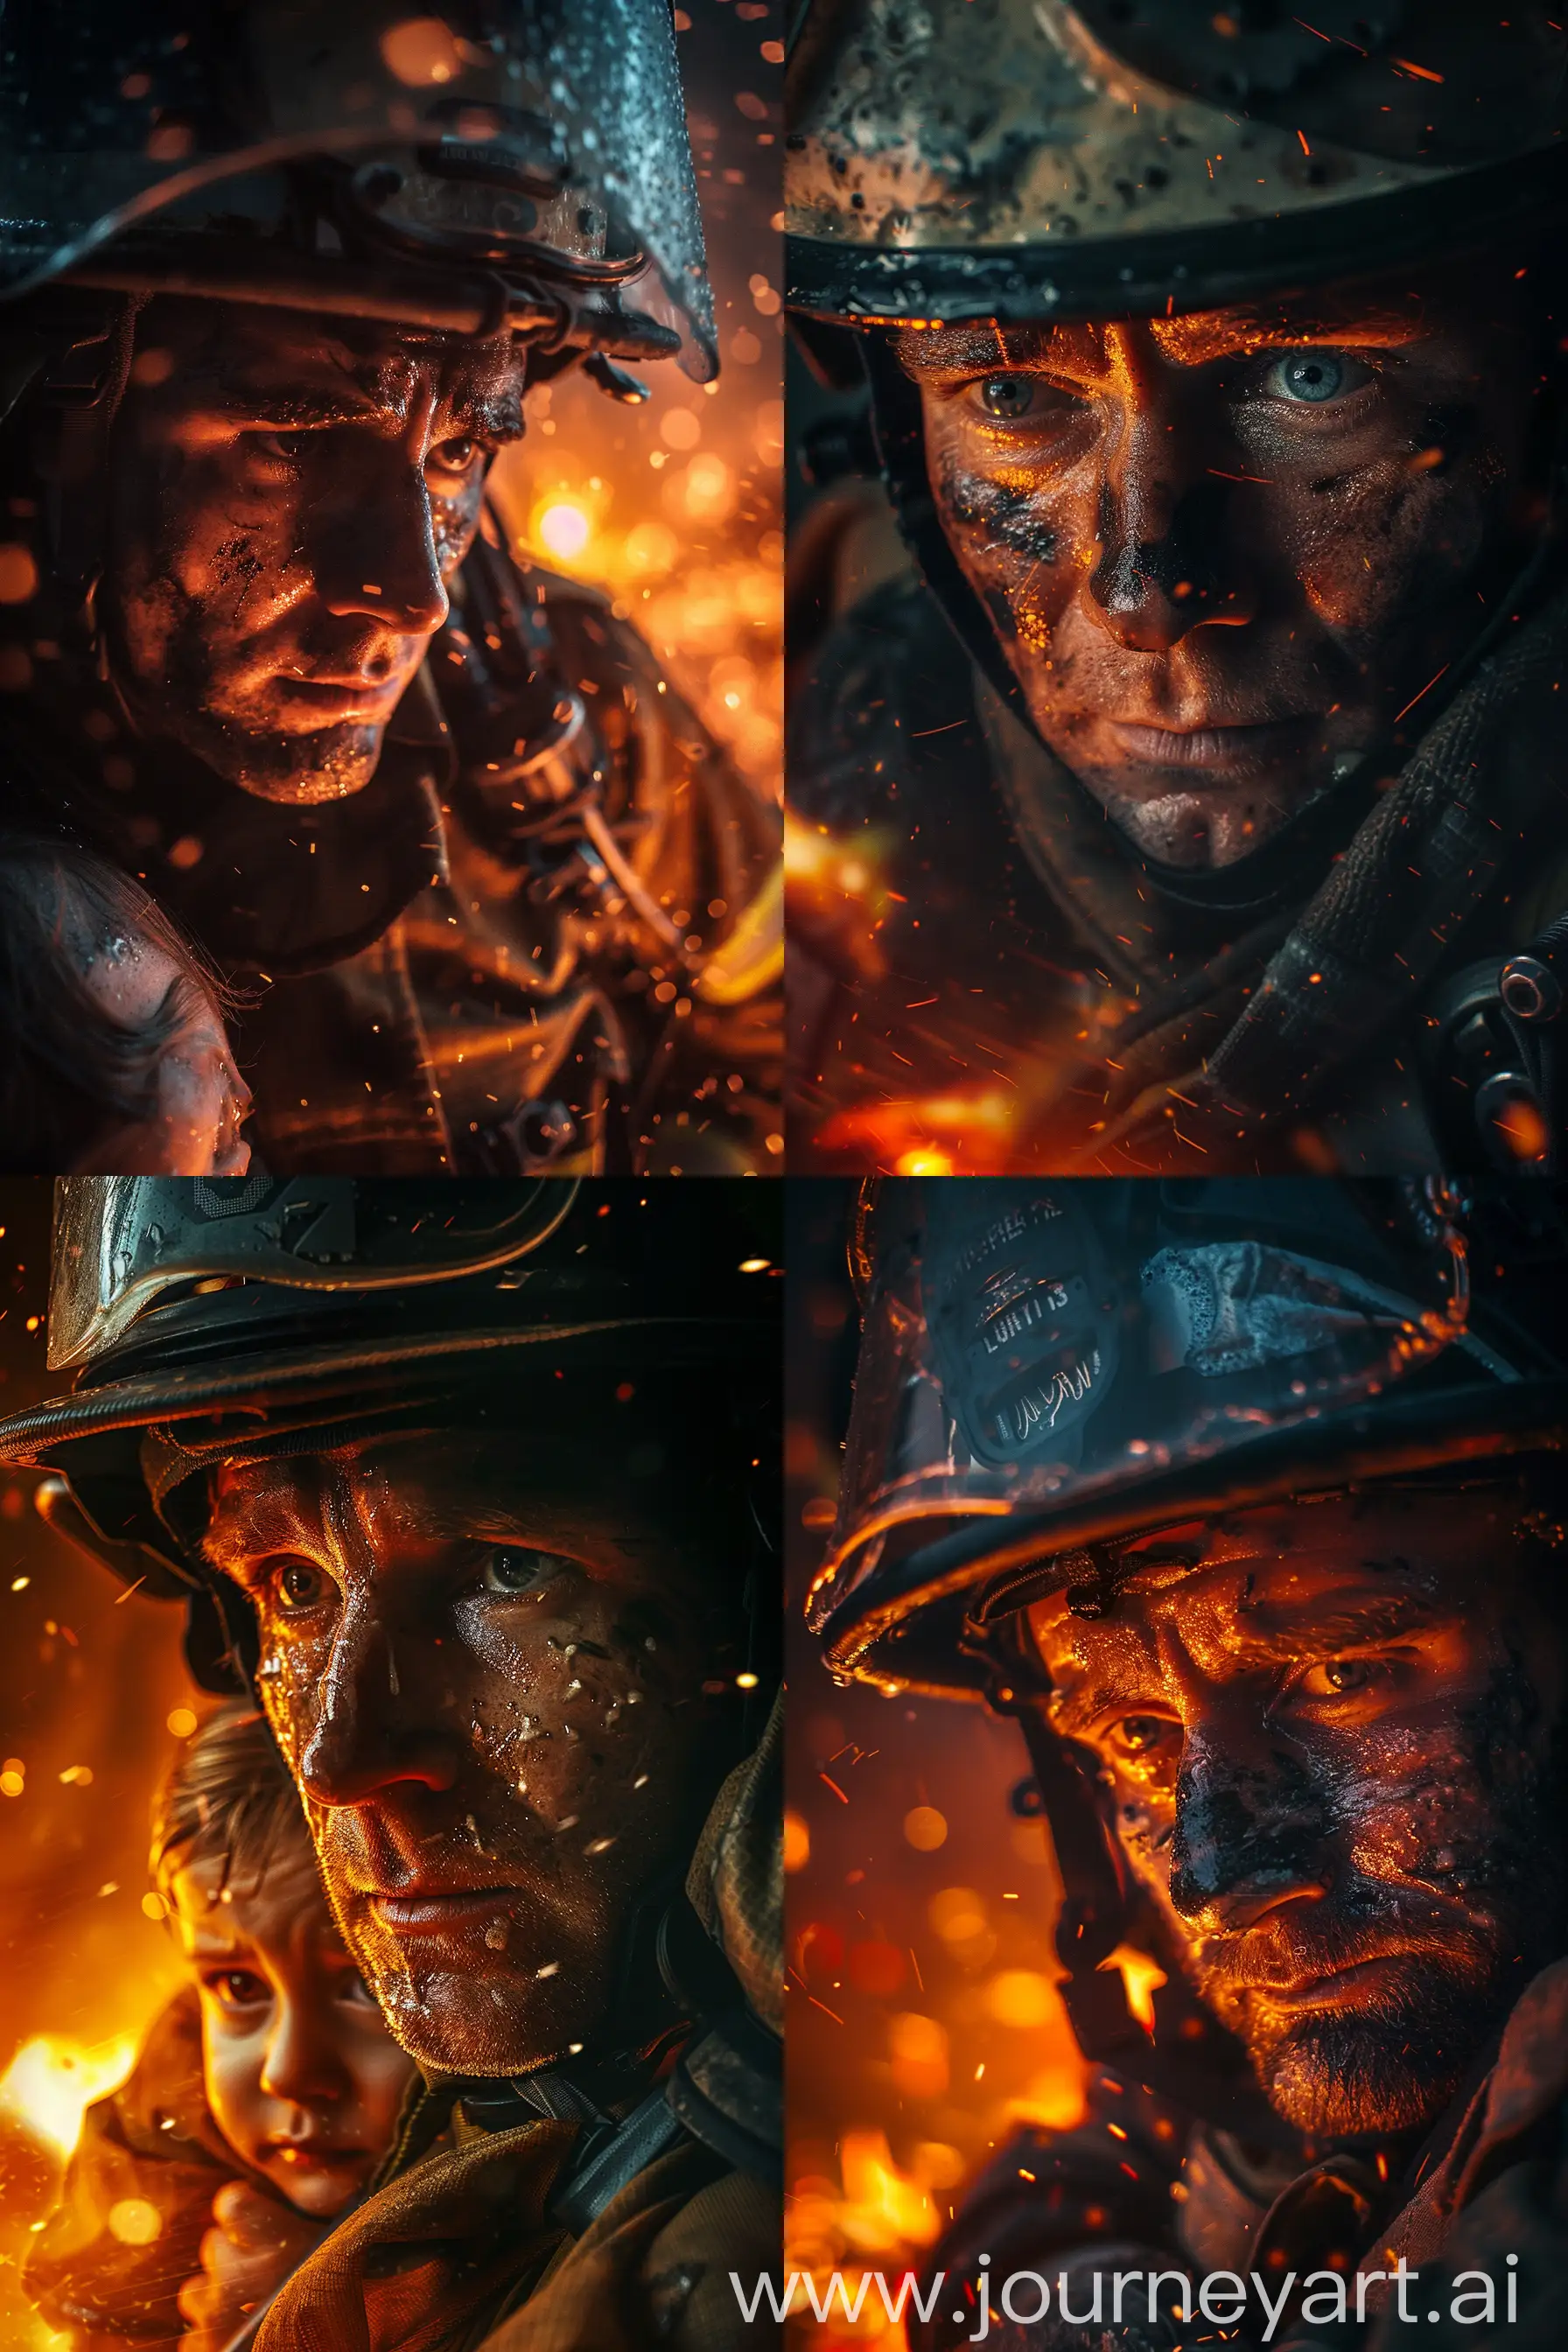 Heroic-Firefighter-Rescuing-Child-from-Nighttime-Blaze